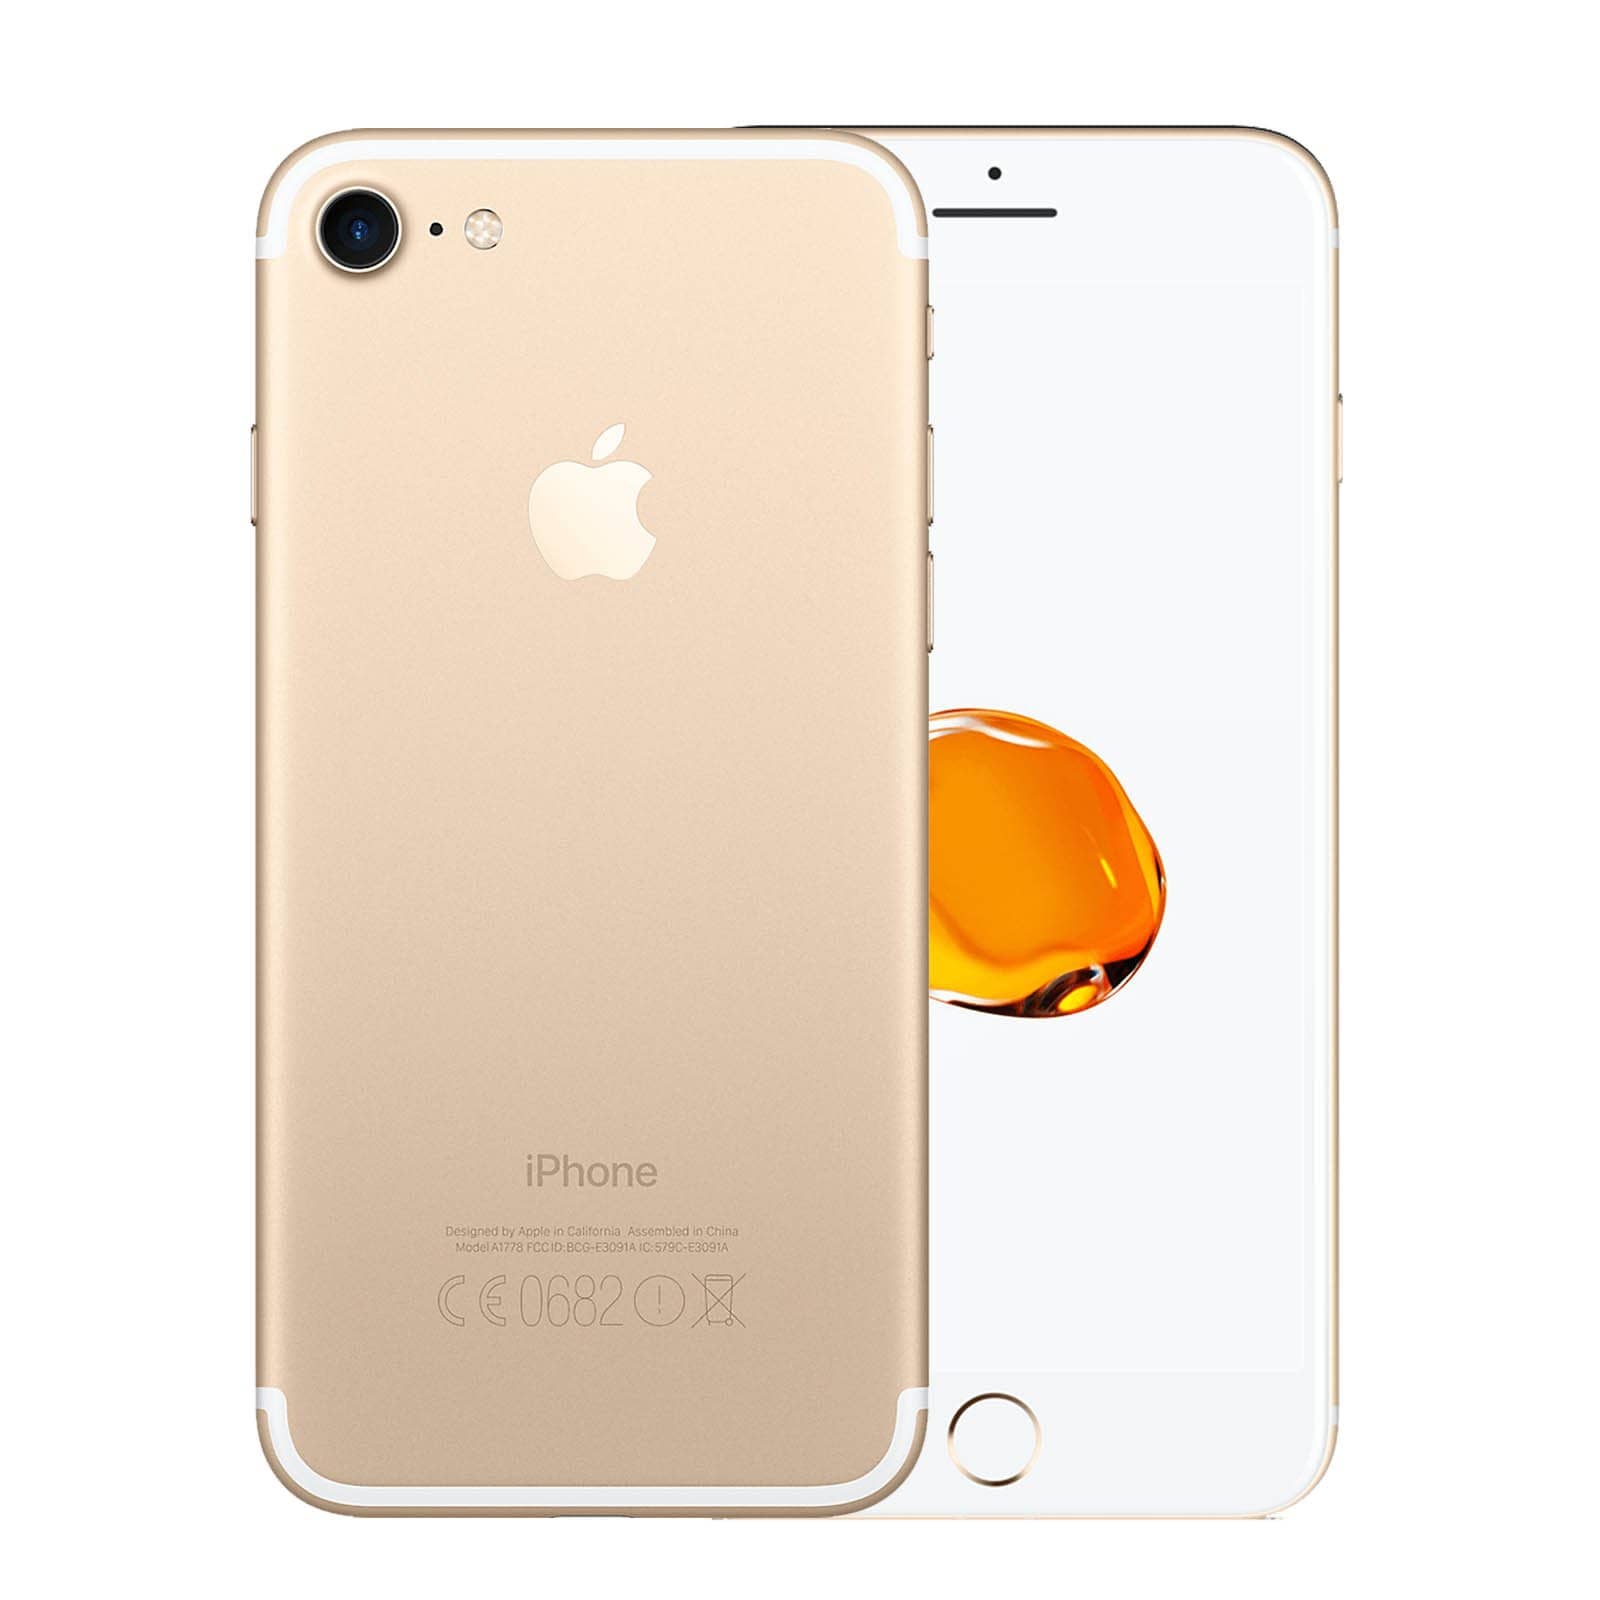 Apple iPhone 7 256GB Gold Good - Unlocked 256GB Gold Good